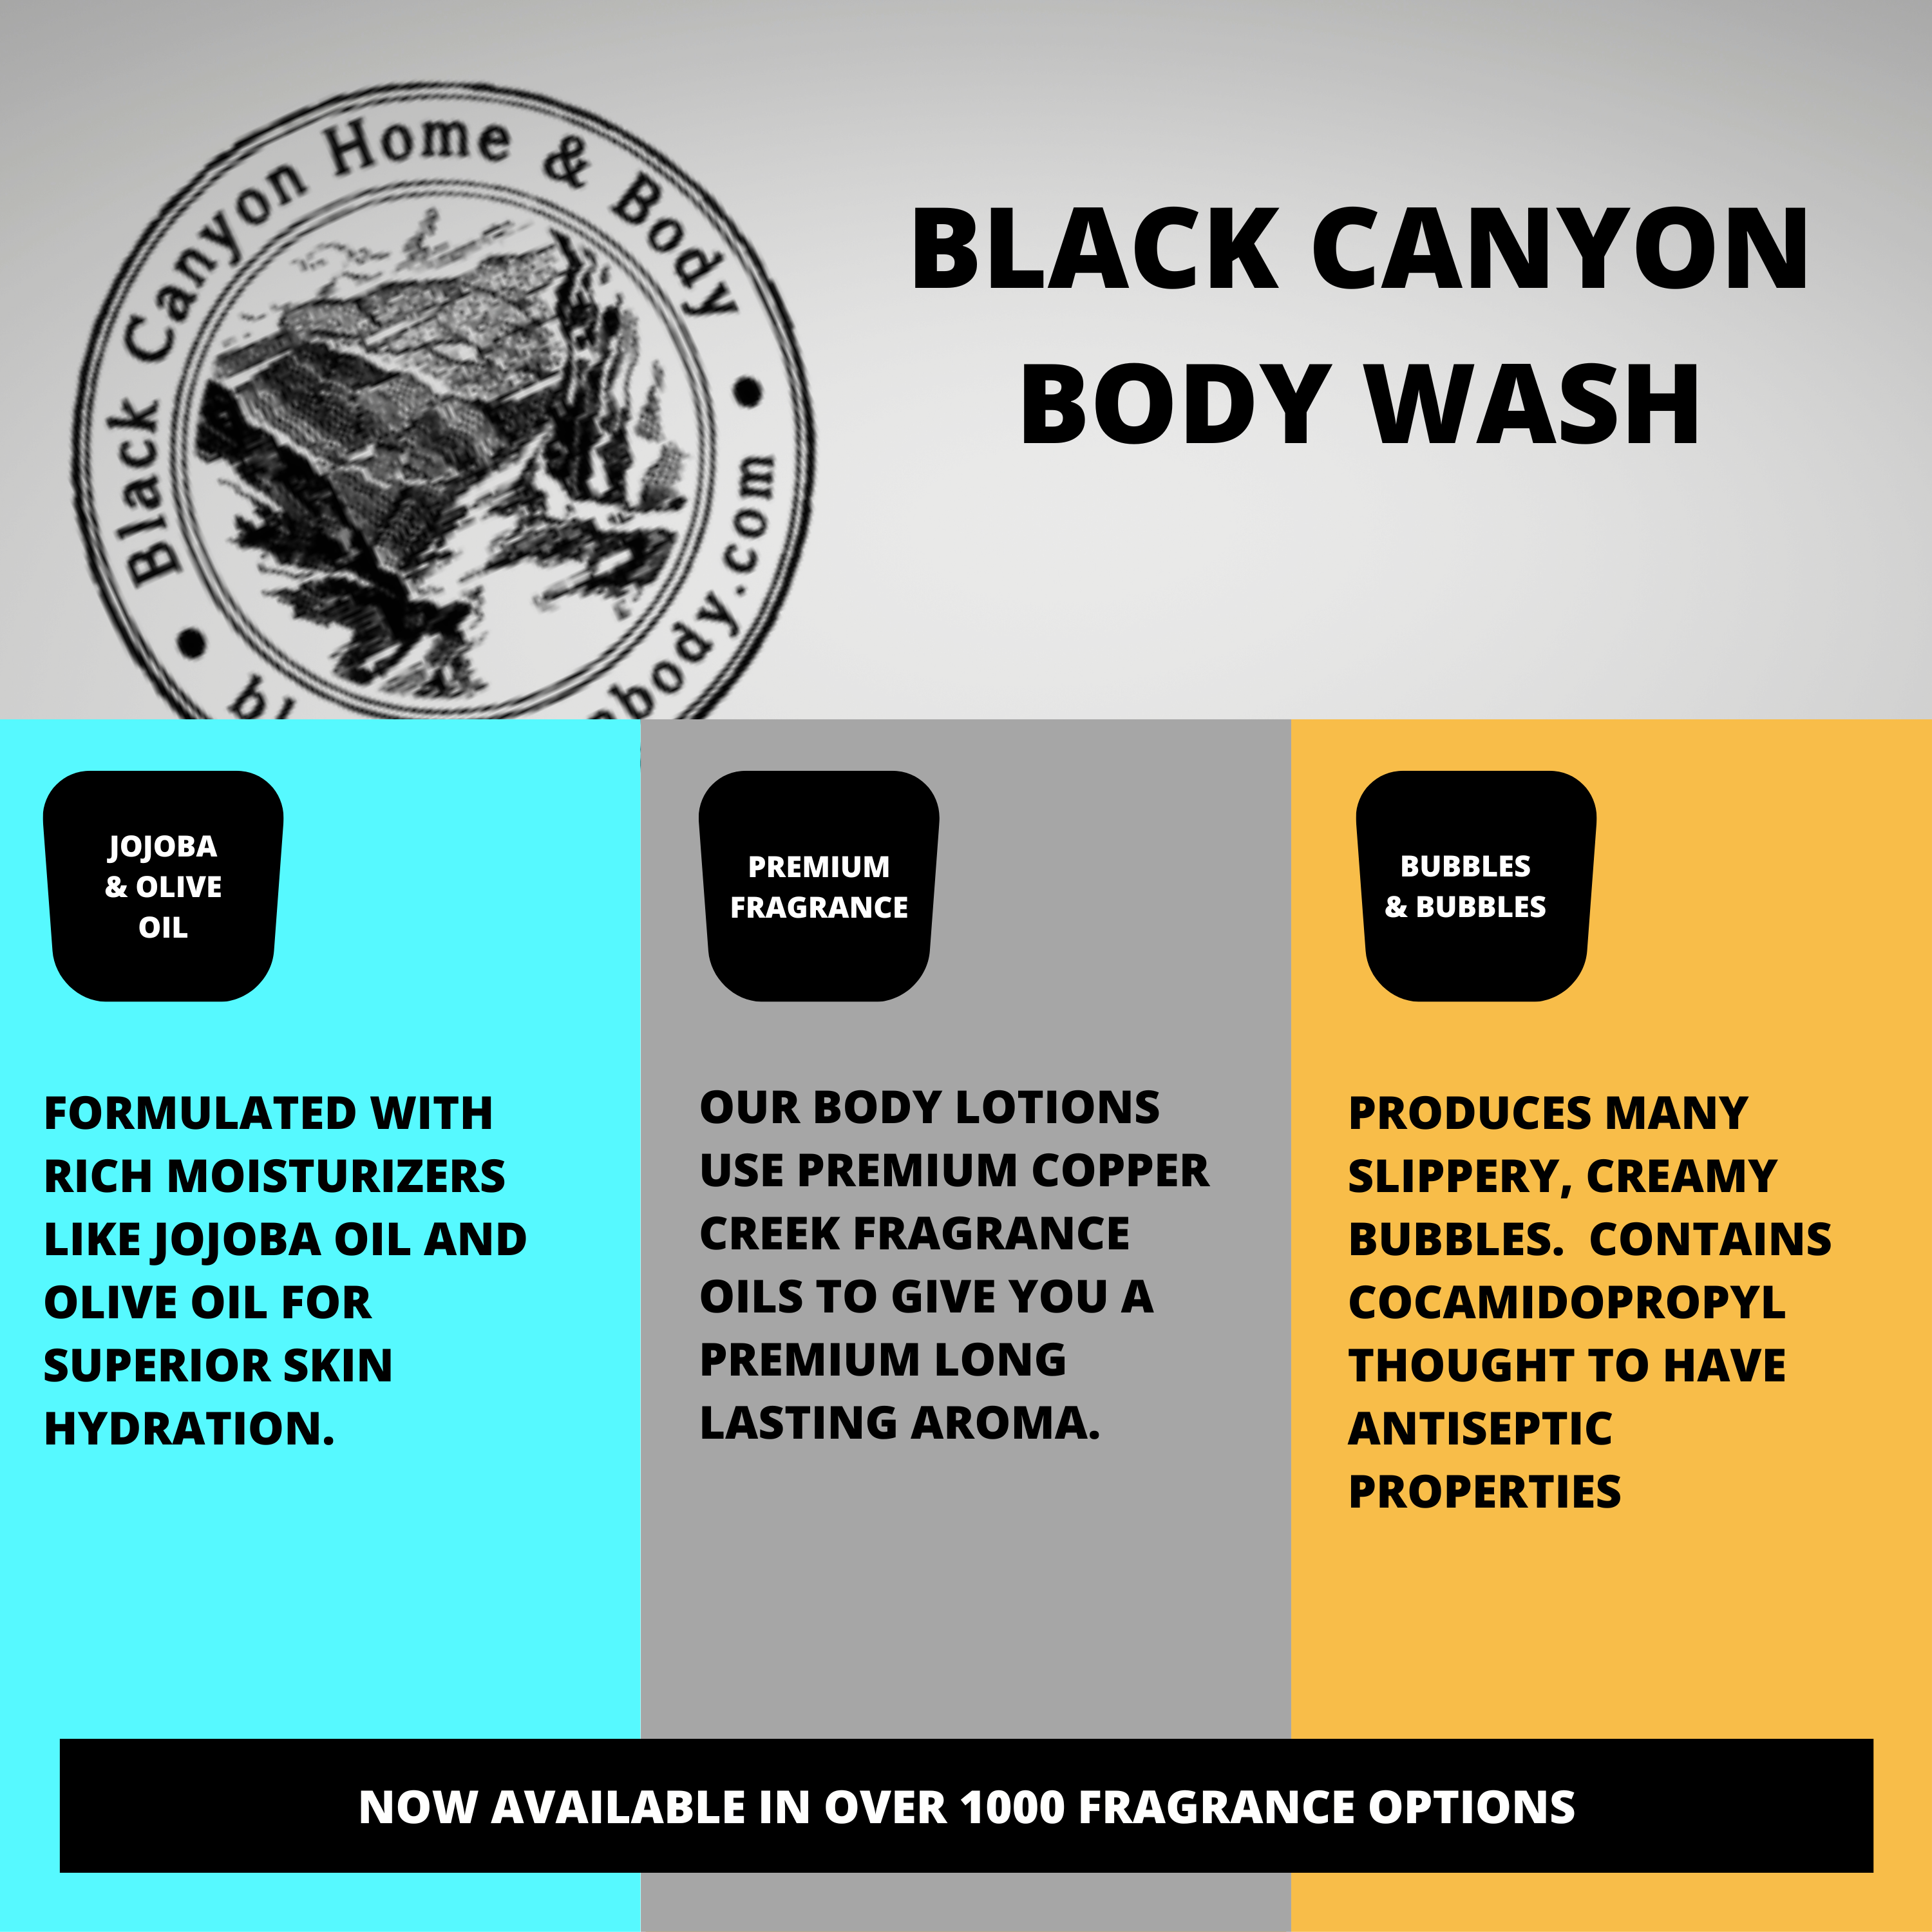 Black Canyon Wild Blackberry Vanilla Scented Luxury Body Wash